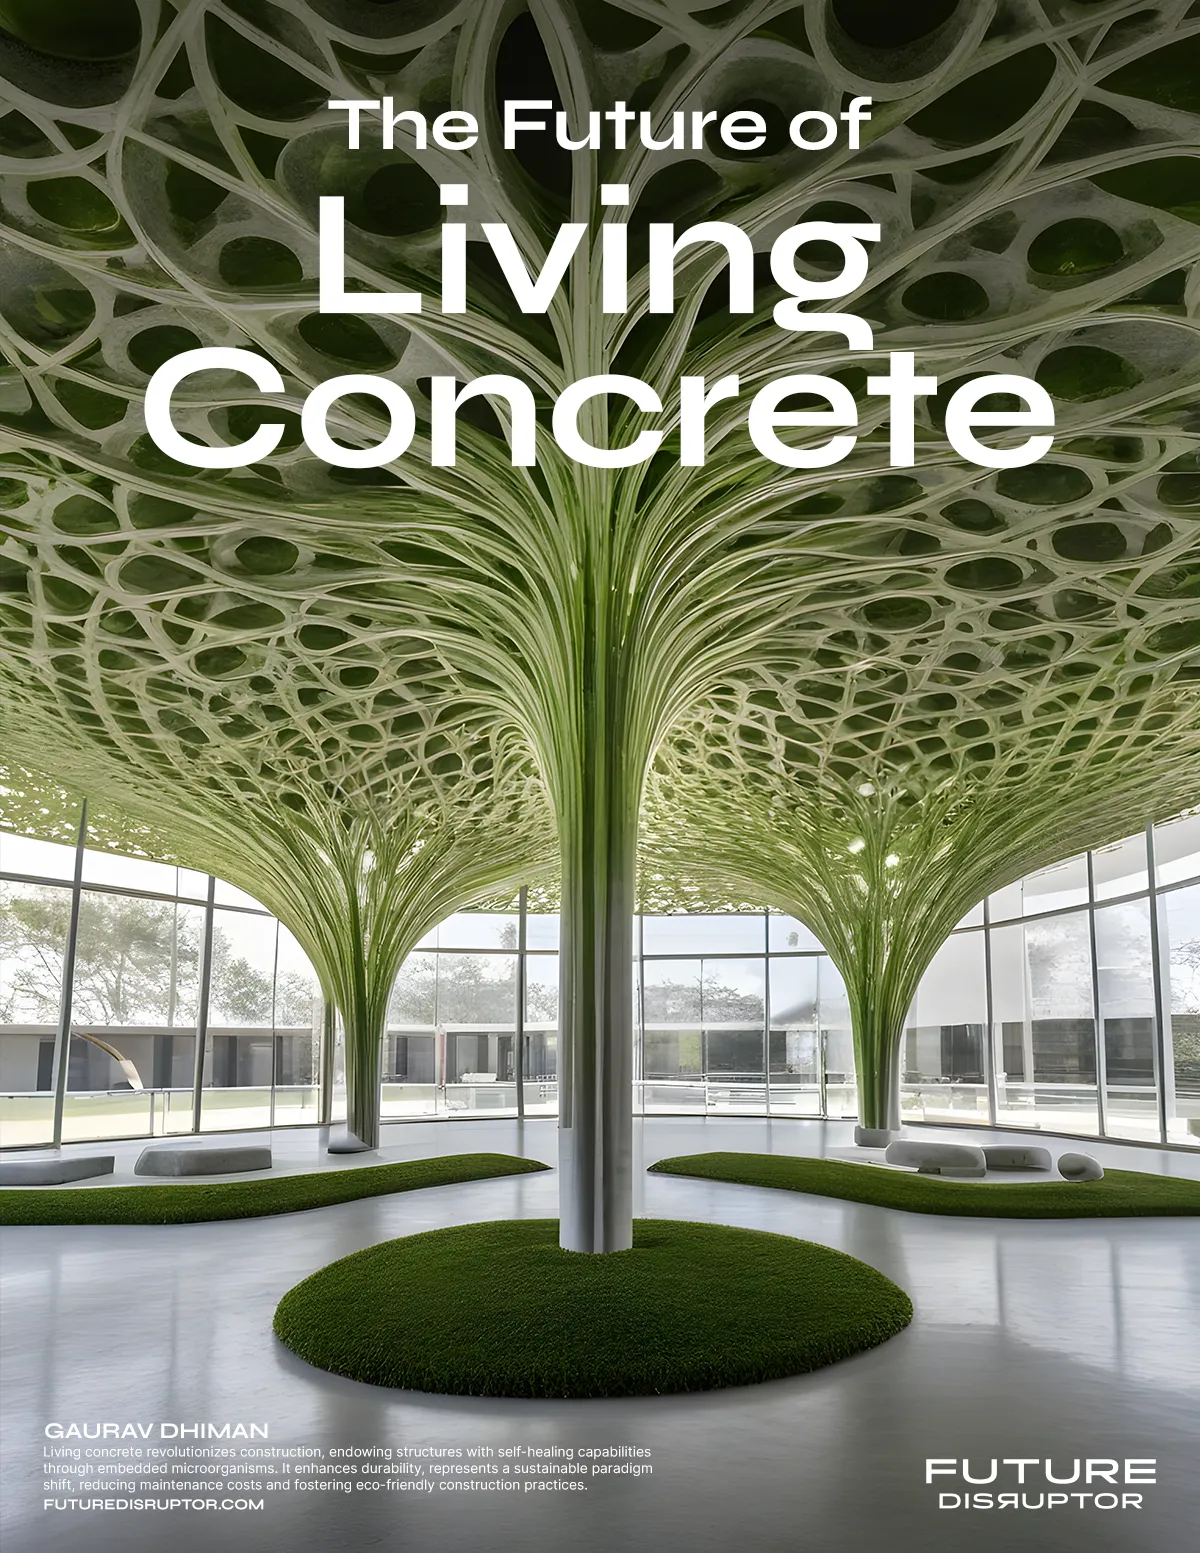 The Future of Living Concrete